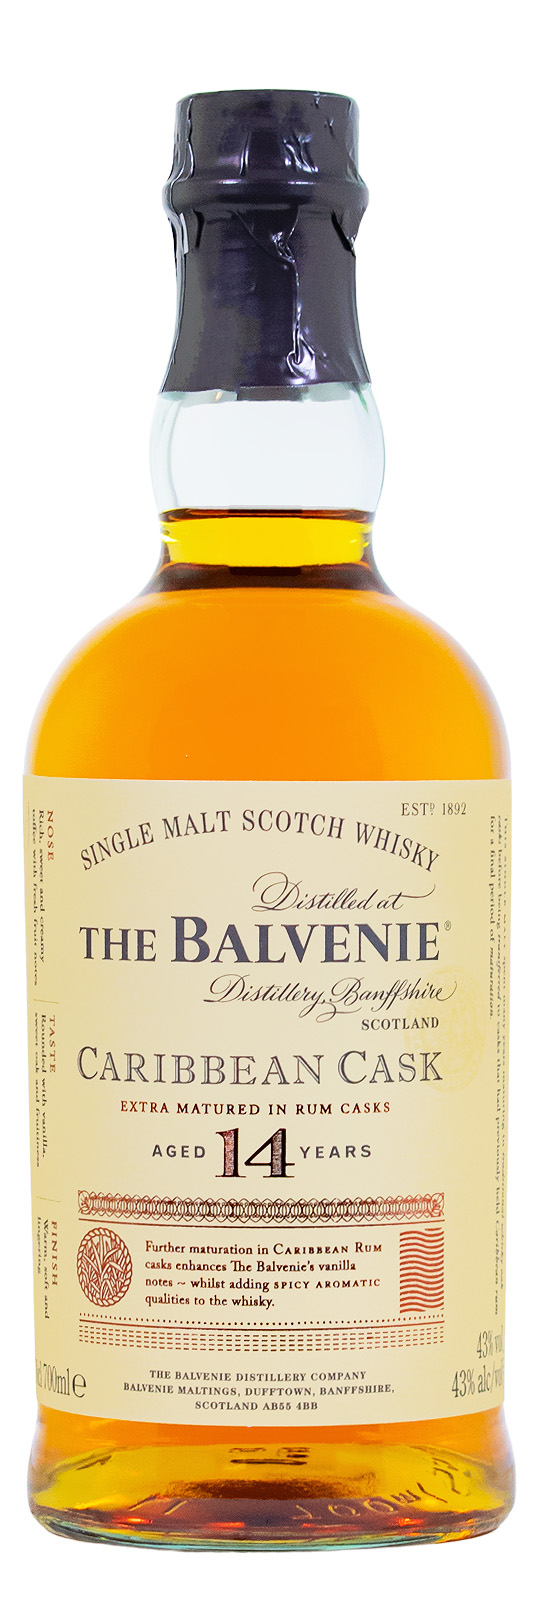 Balvenie 14 Jahre Carribean Cask Single Malt Scotch Whisky - 0,7L 43% vol